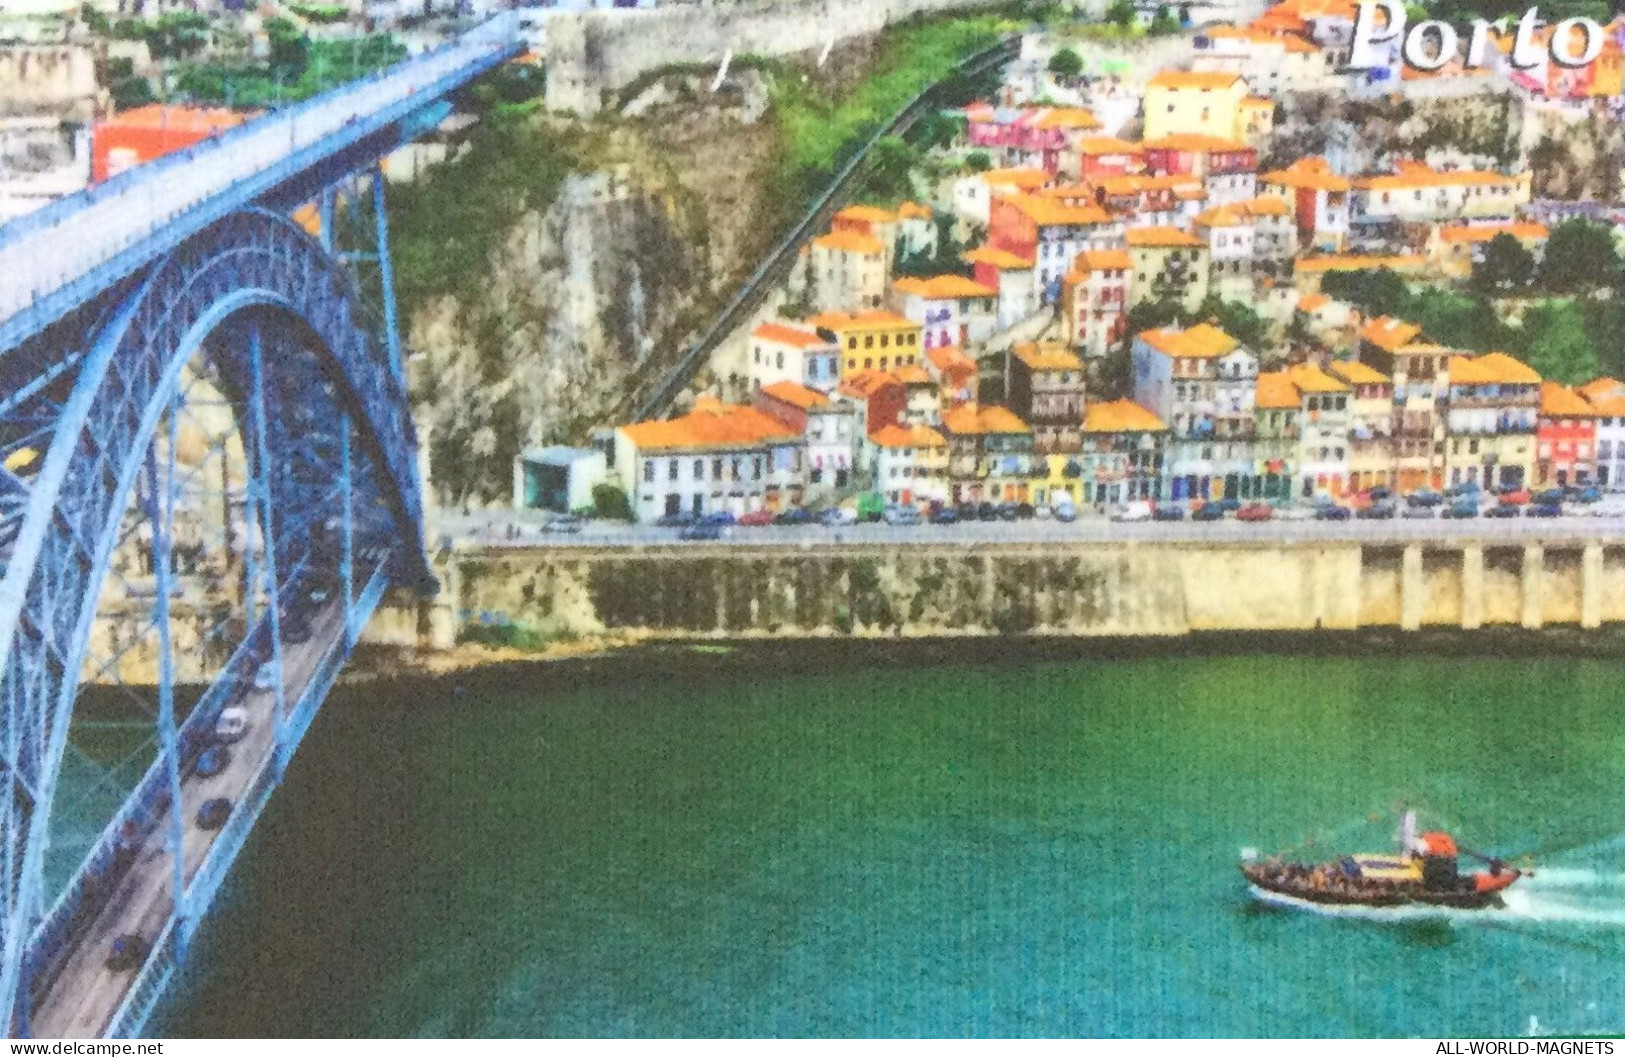 Porto Duoro River Bridges Boat City Vew Portugal Souvenir Fridge Magnet - Magnetos